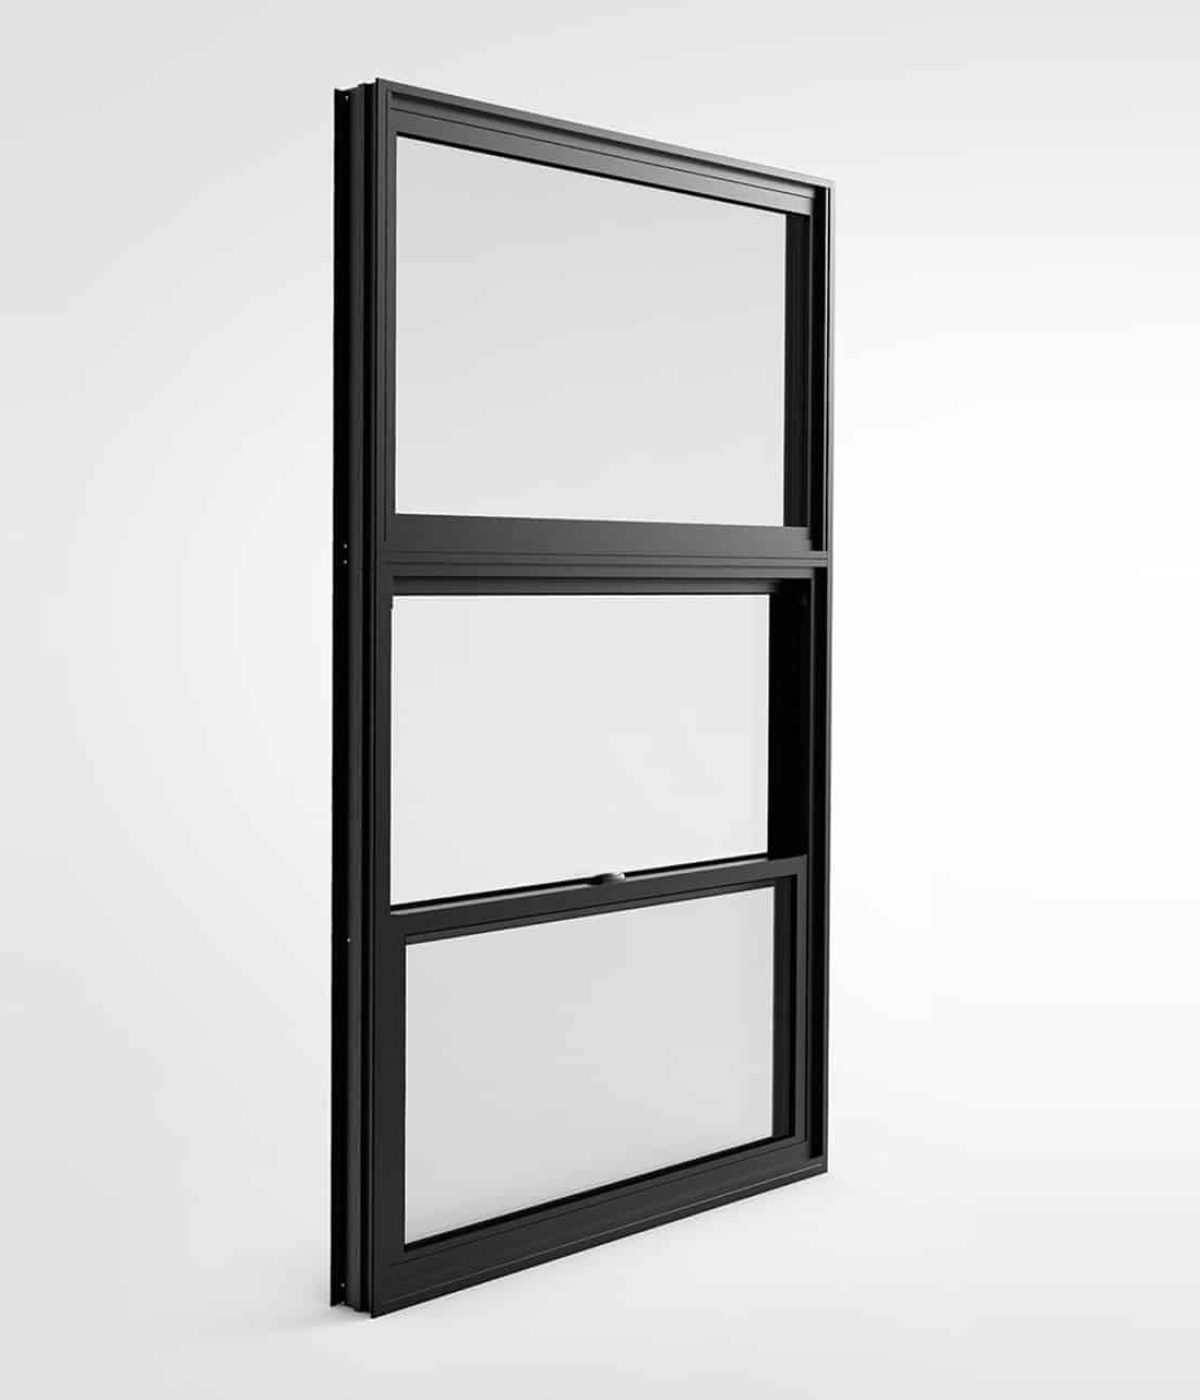 An image of a 620 single-hung window.